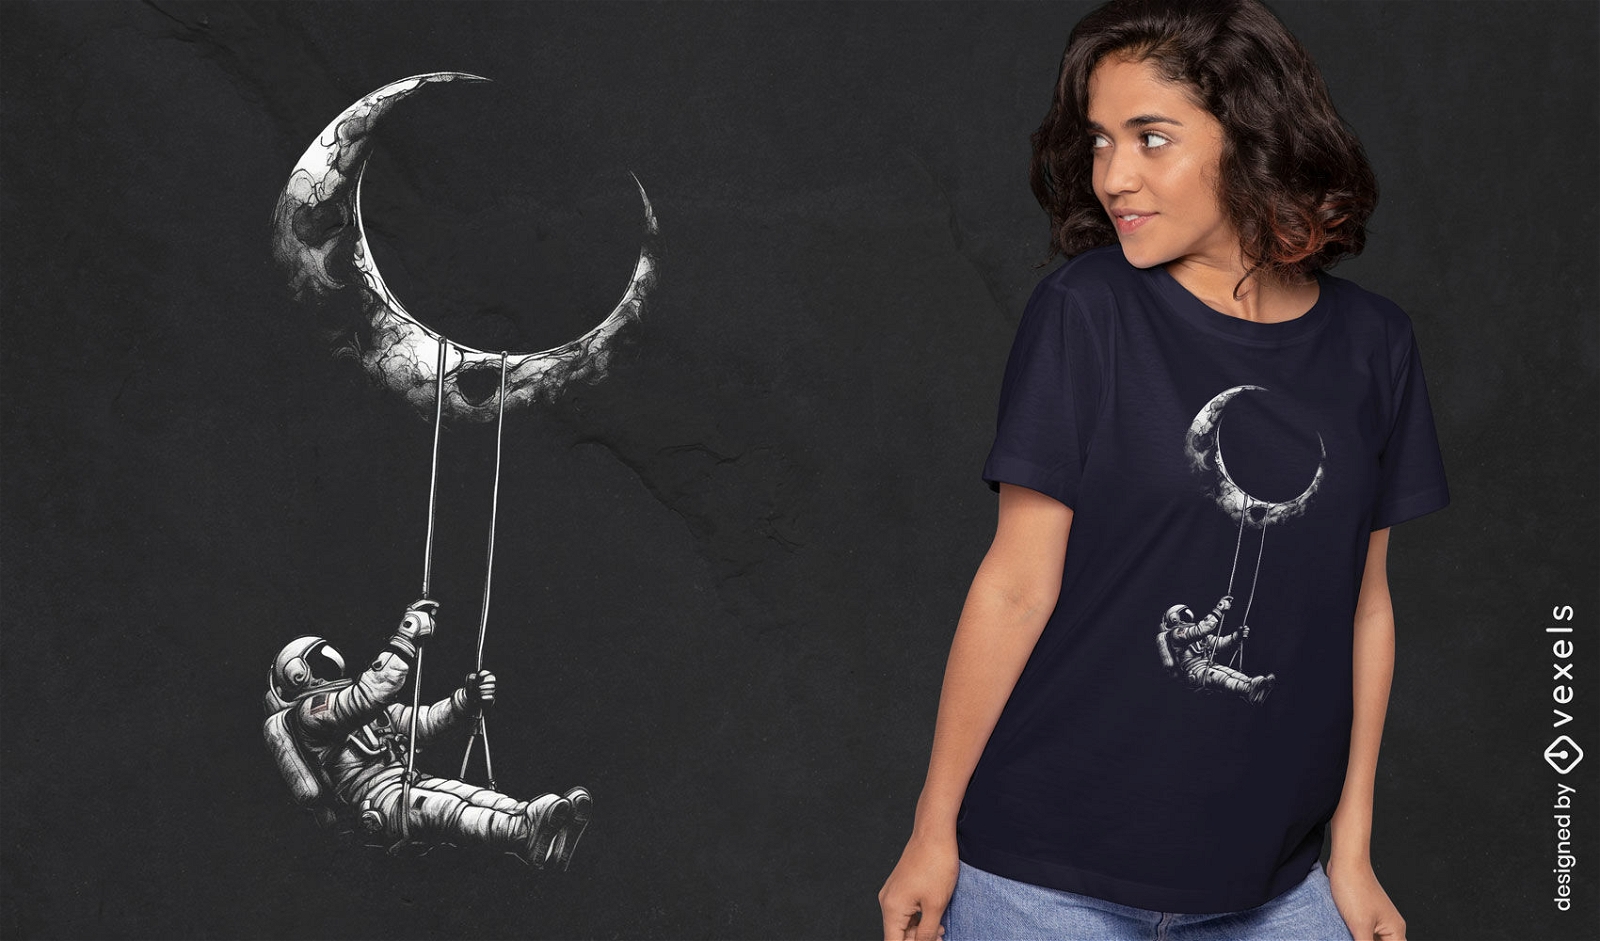 Astronaut moon swing t-shirt design